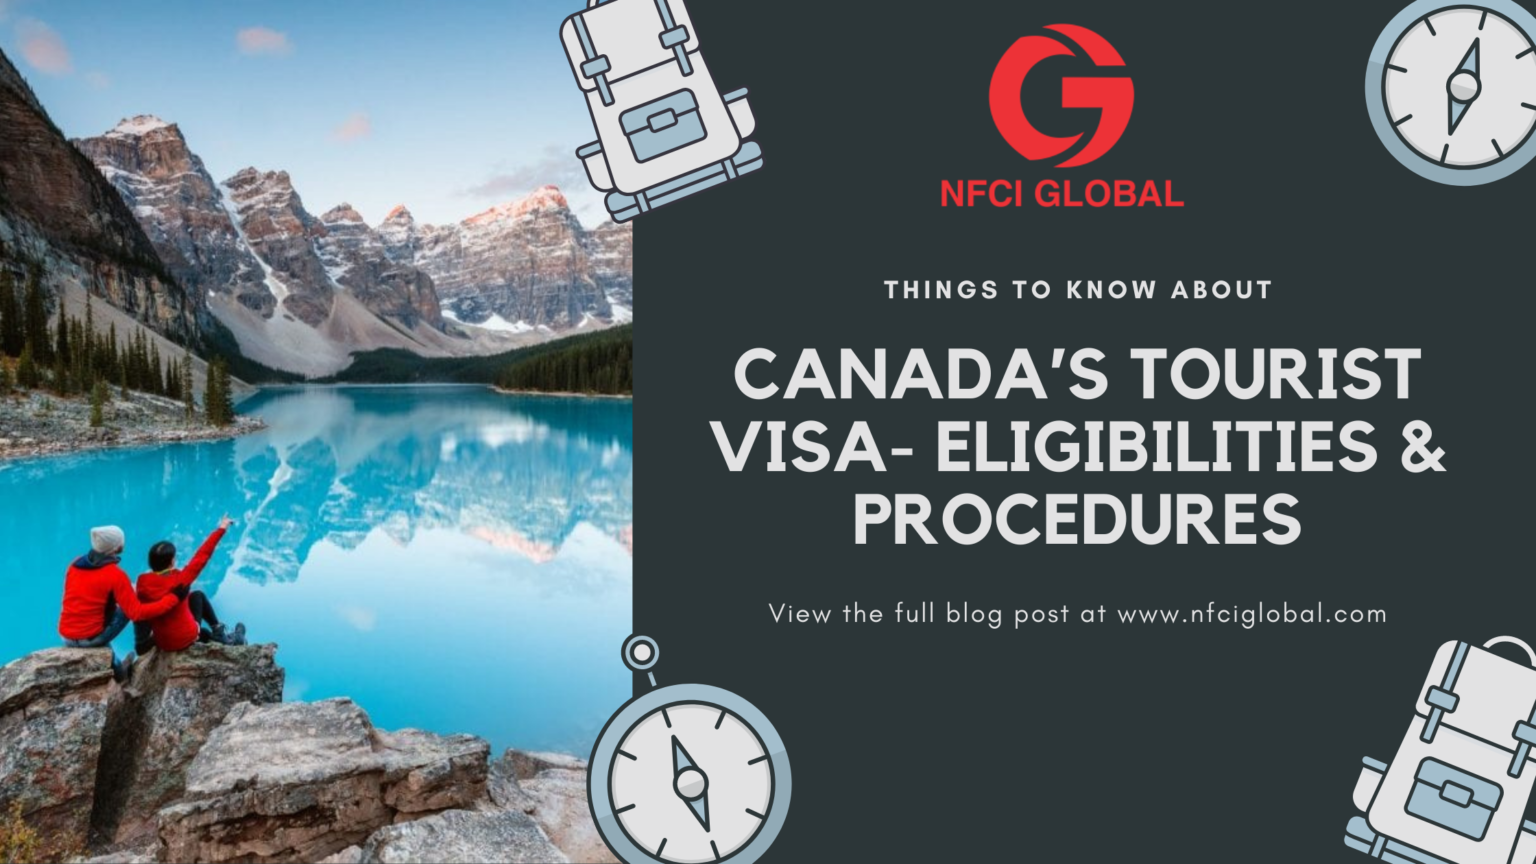 canada tourist visa new portal